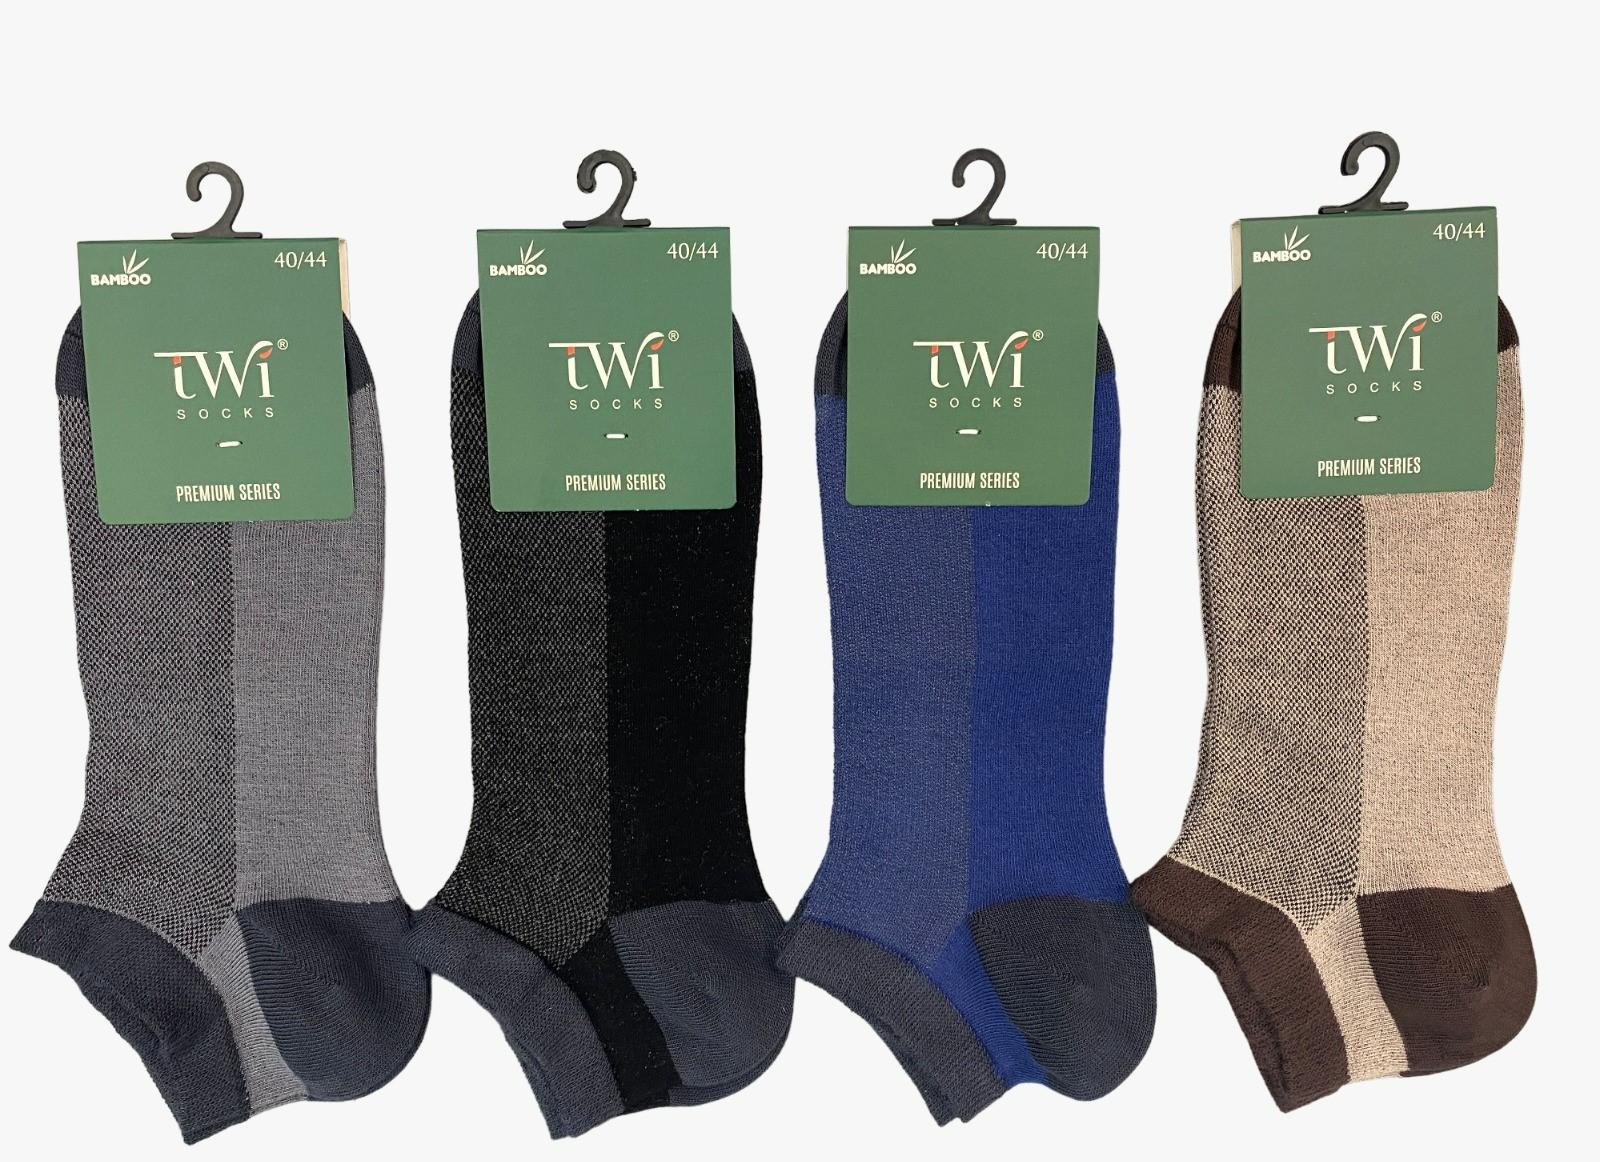 Selected image for TWISOCKS Muške čarape Bambus Premijum 403 4/1